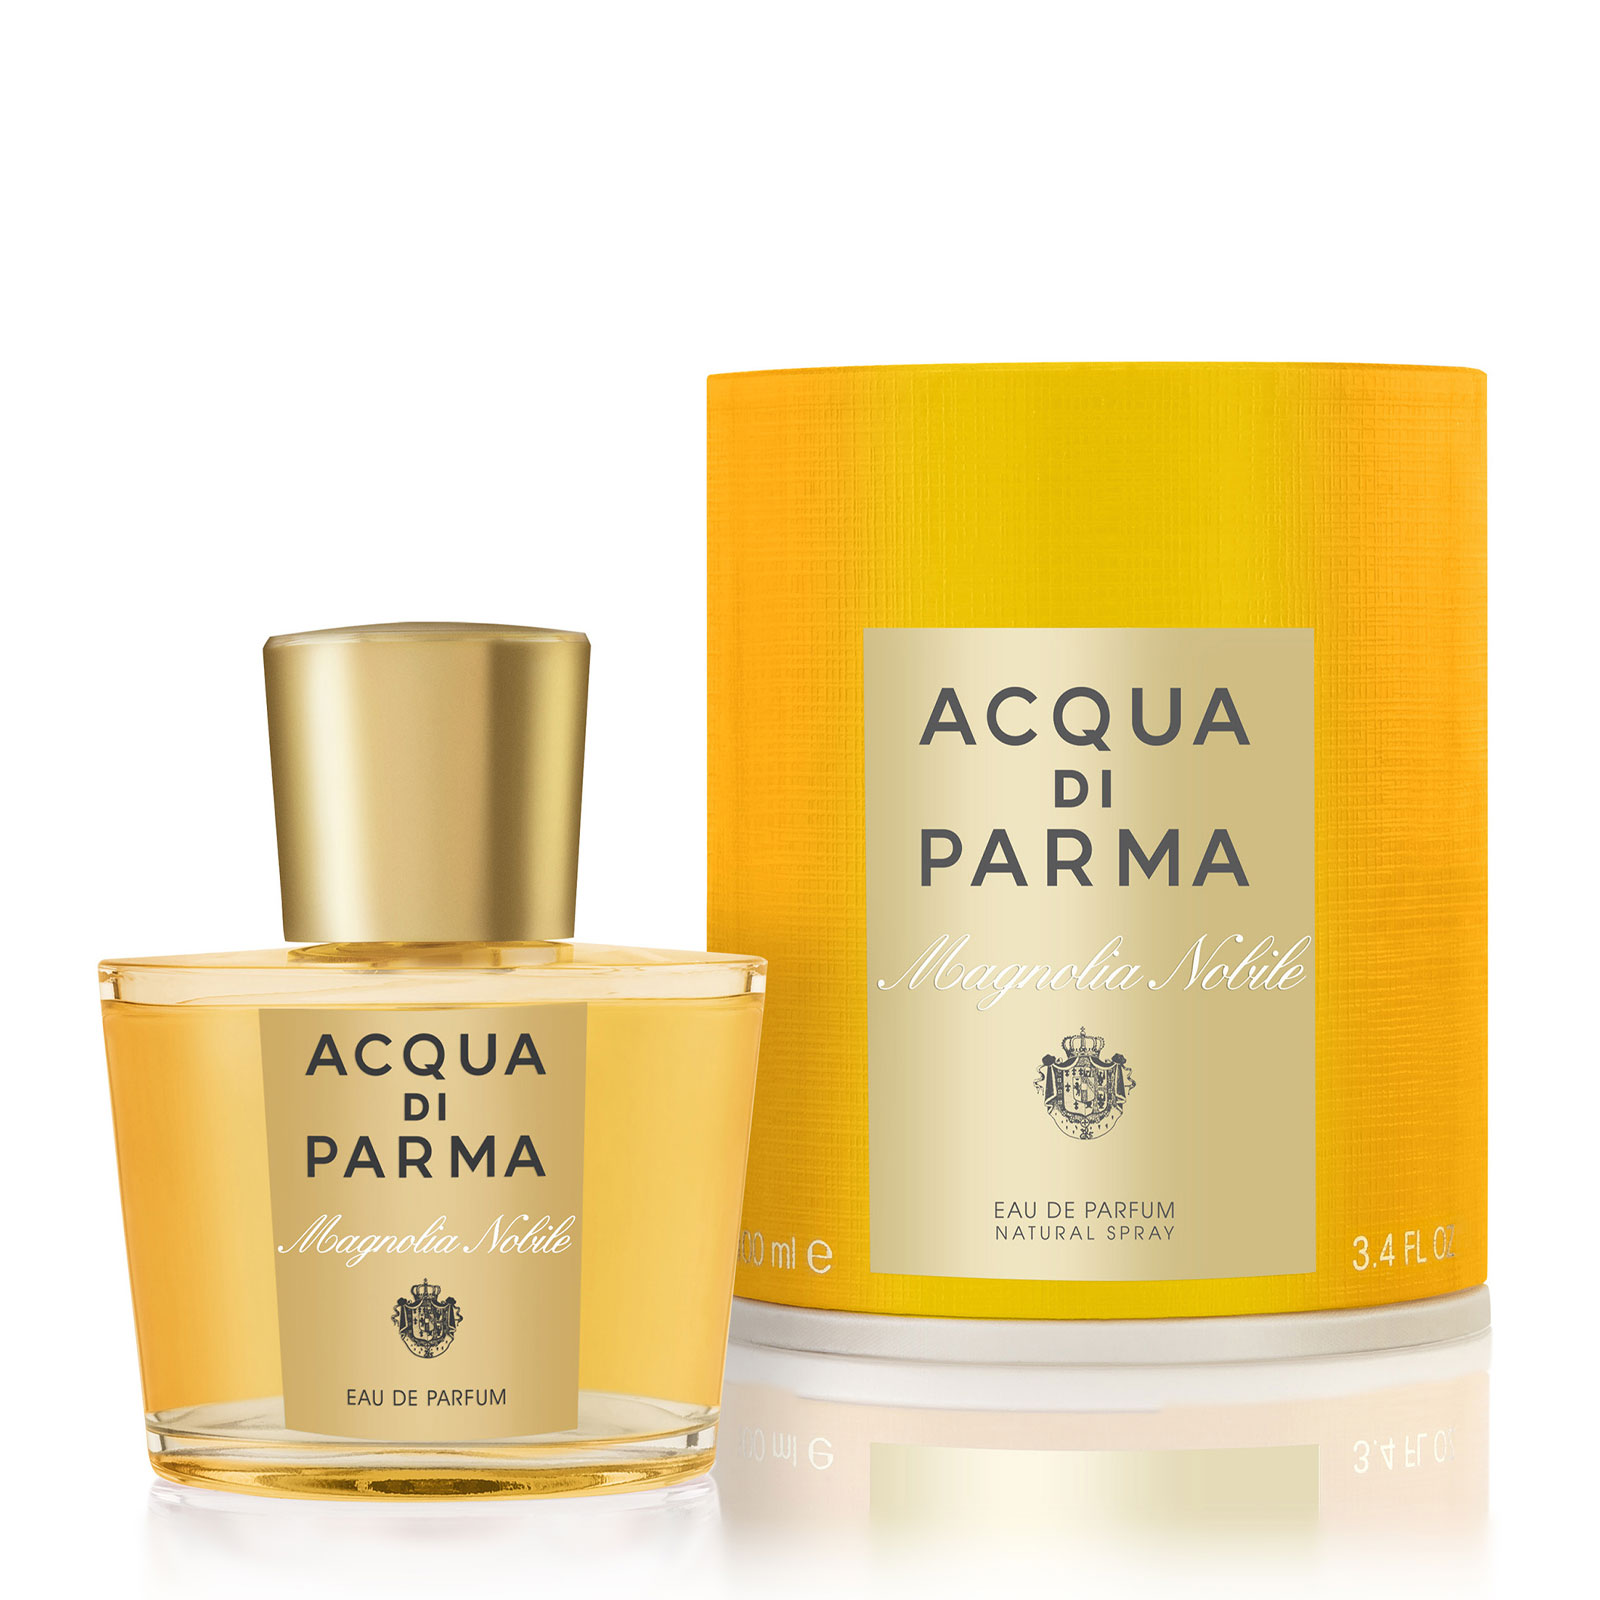 Acqua Di Parma Magnolia Nobile Eau De Parfum Natural Spray 100Ml